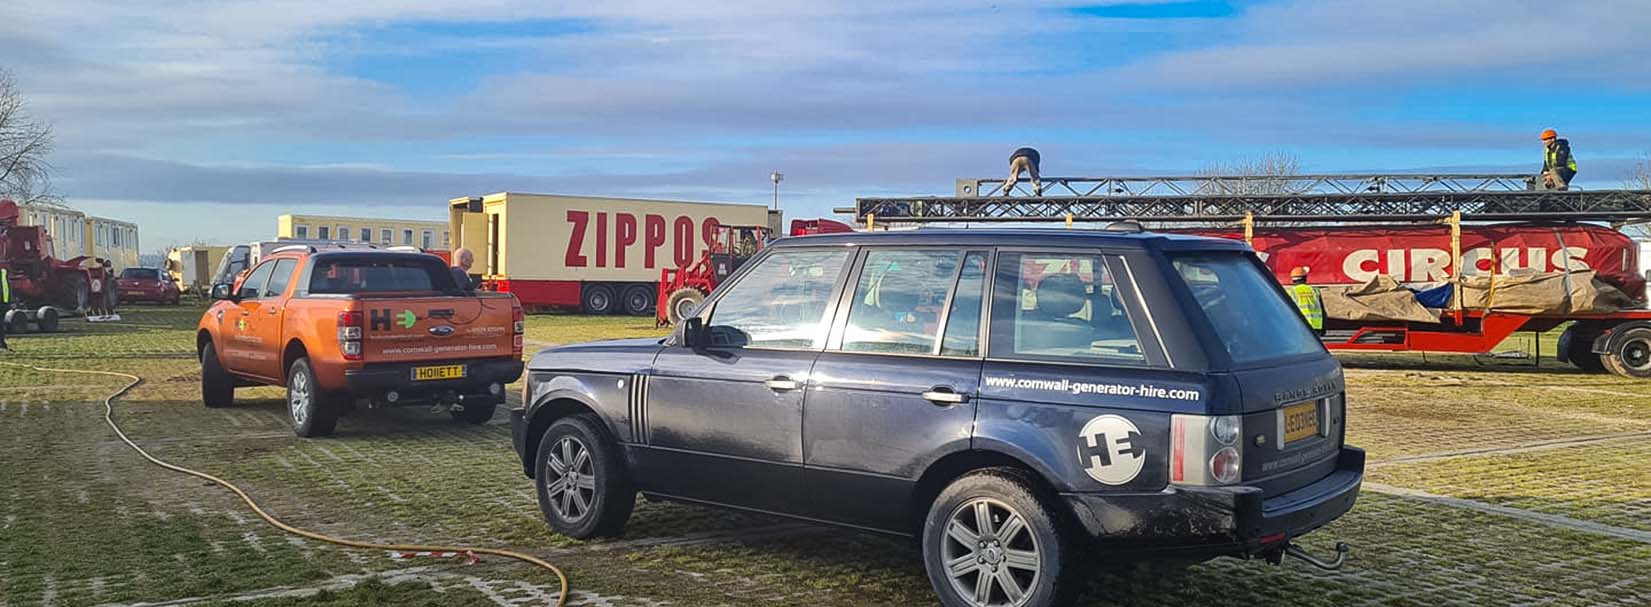 Emergency generators delivered to Zippo Circus